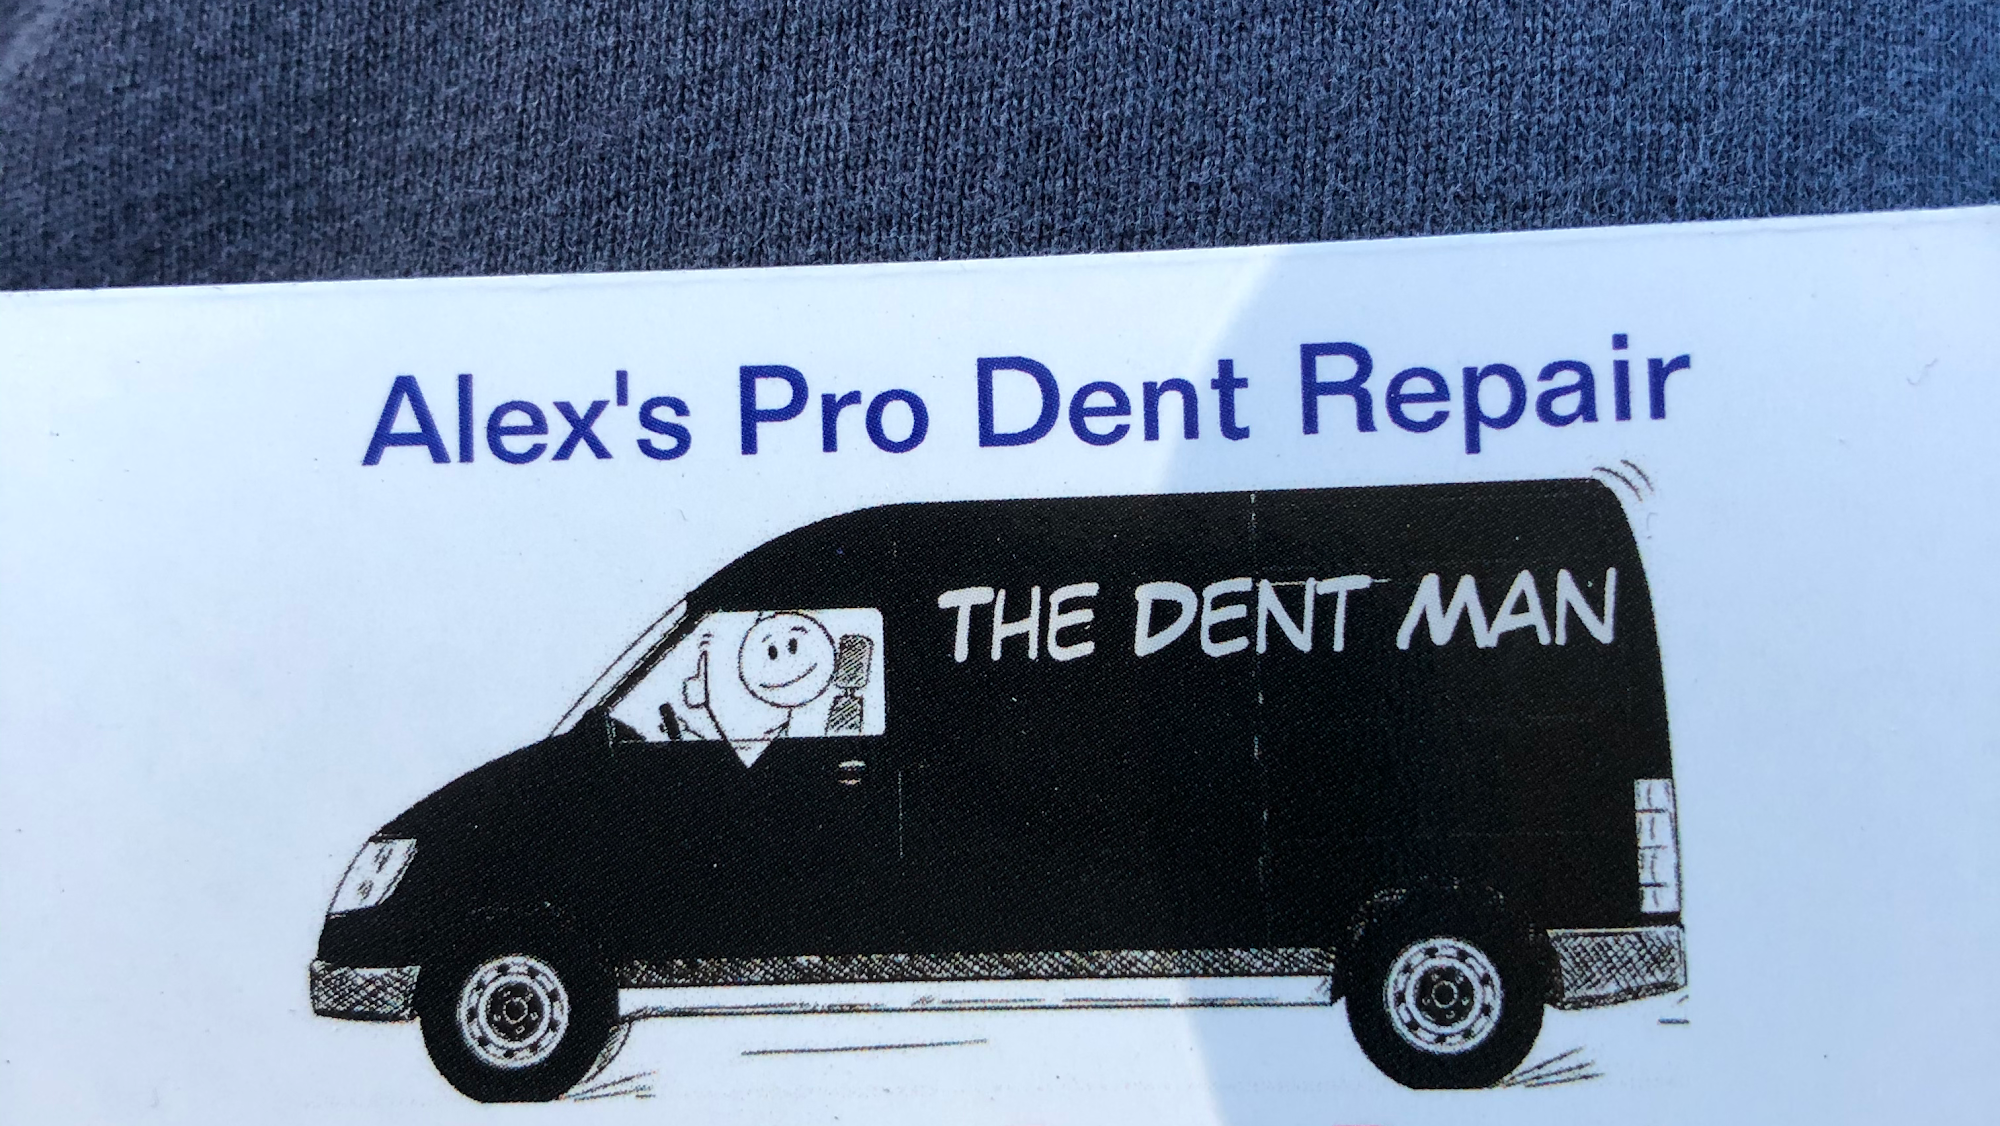 Alex's Pro Dent Repair